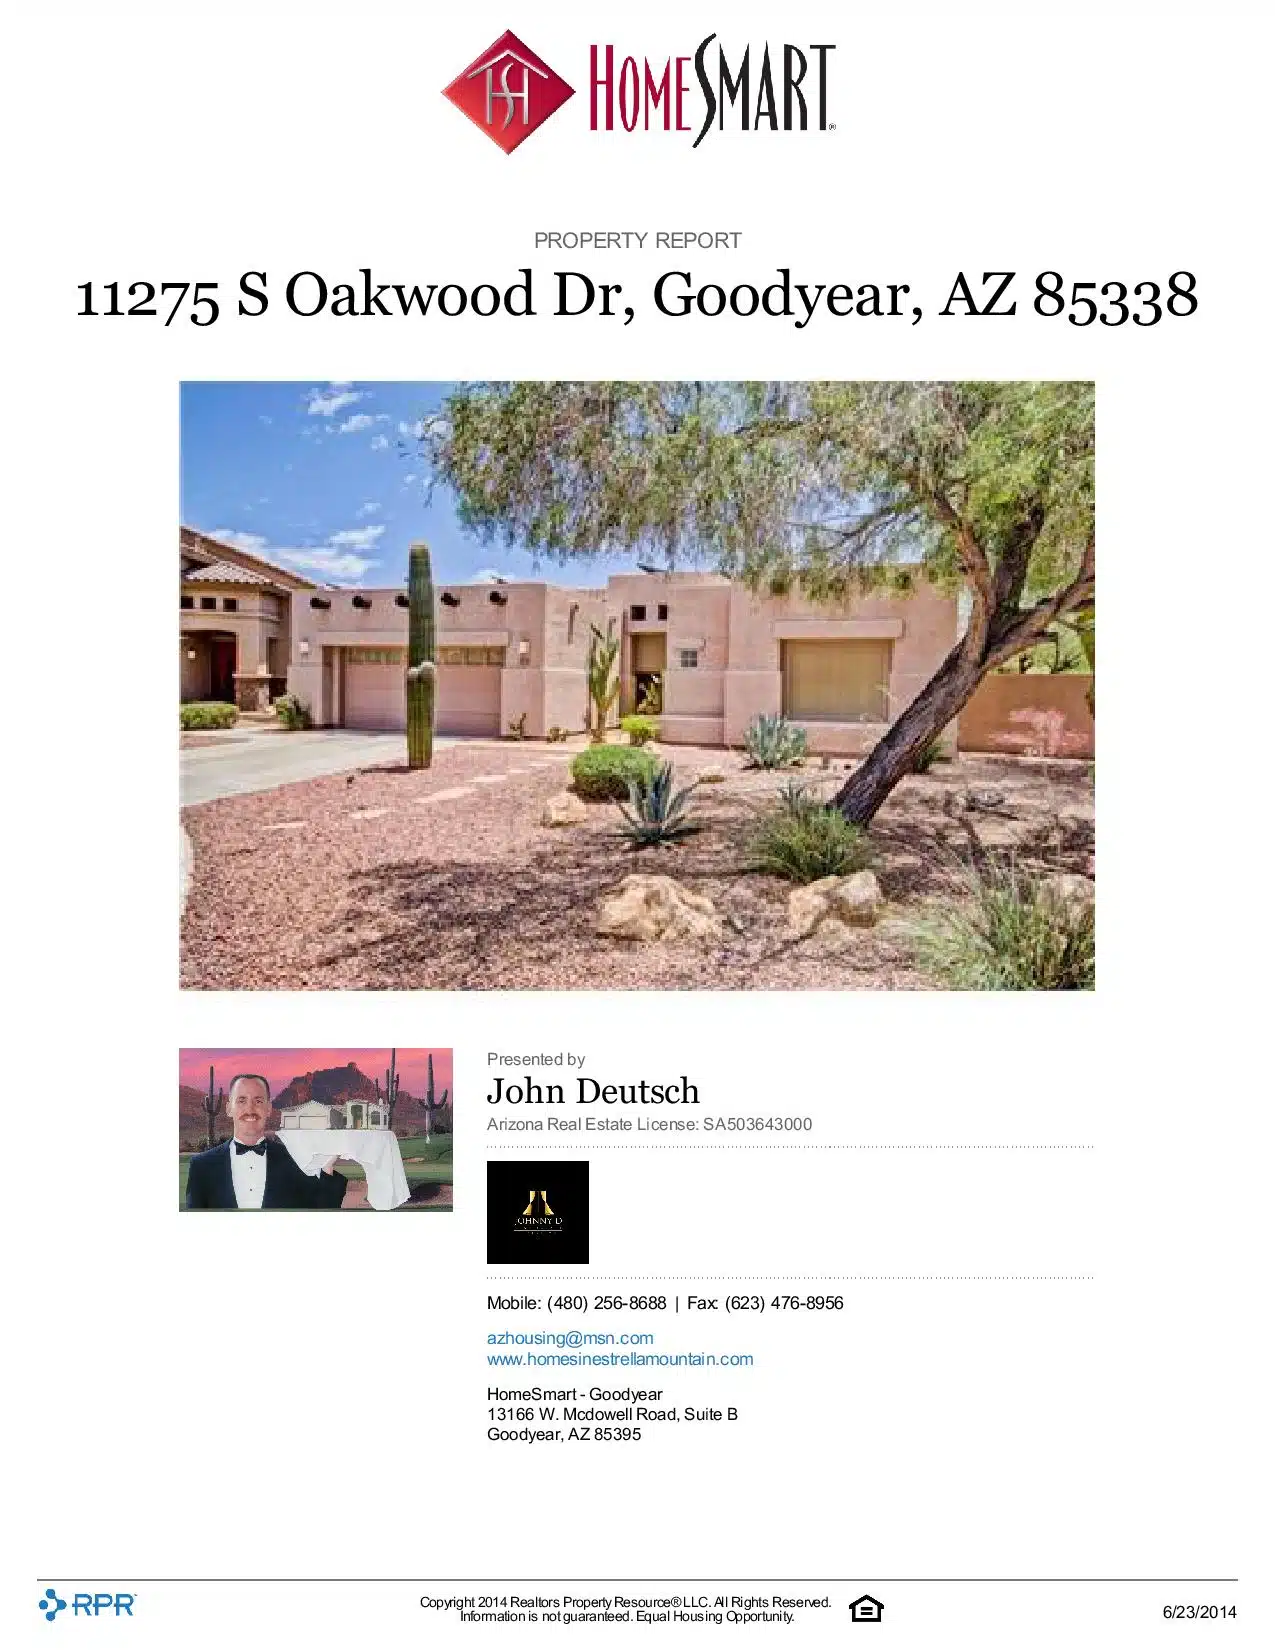 11275-S-Oakwood-Dr-Goodyear-AZ-85338-page-001